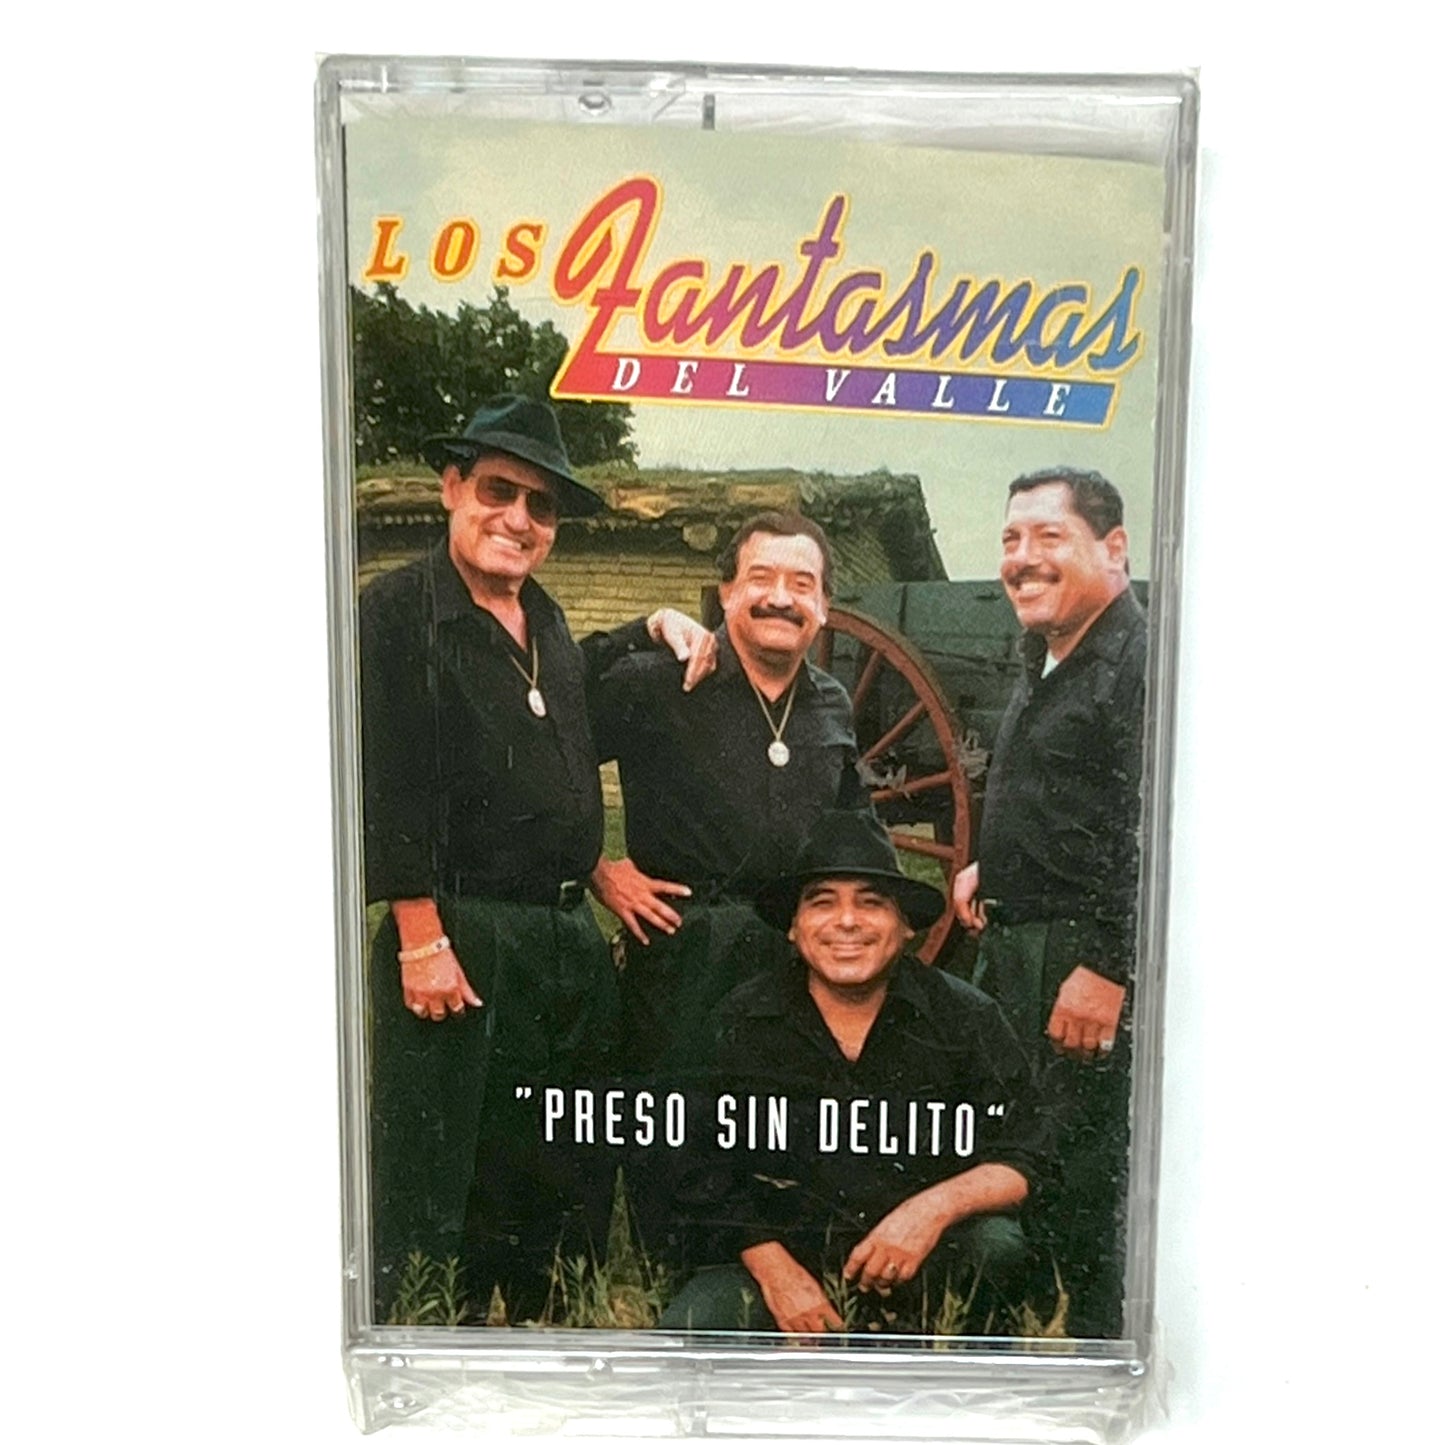 Los Fantasmas Del Valle - Preso Sin Delito (Cassette)